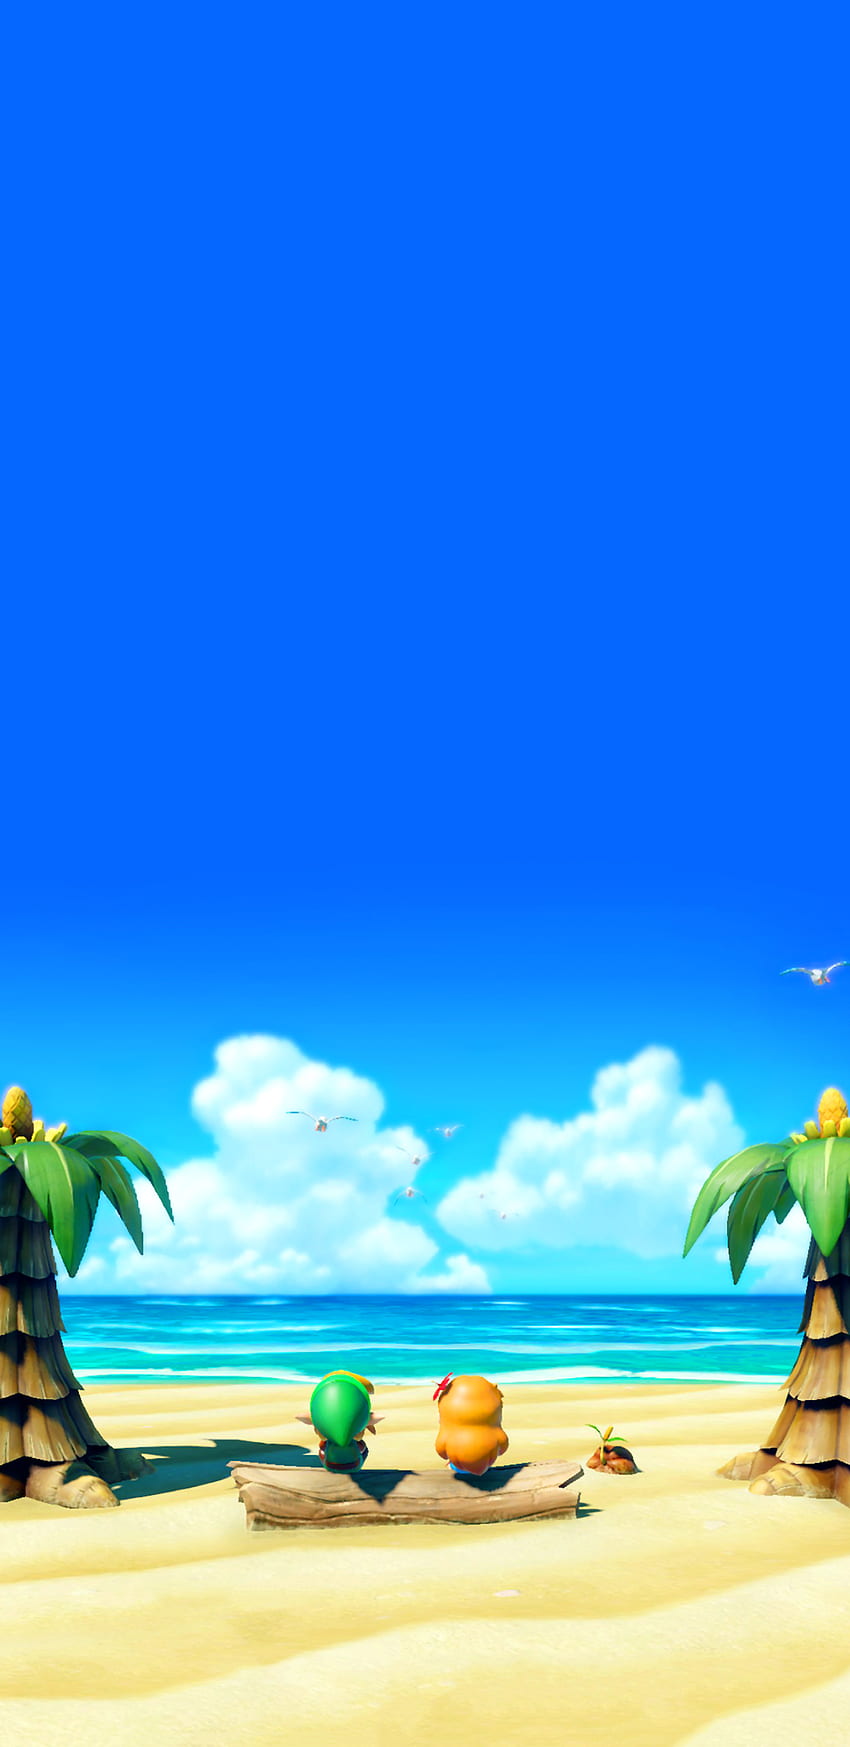 The Legend of Zelda: Link's Awakening Beach Papel de parede de celular HD